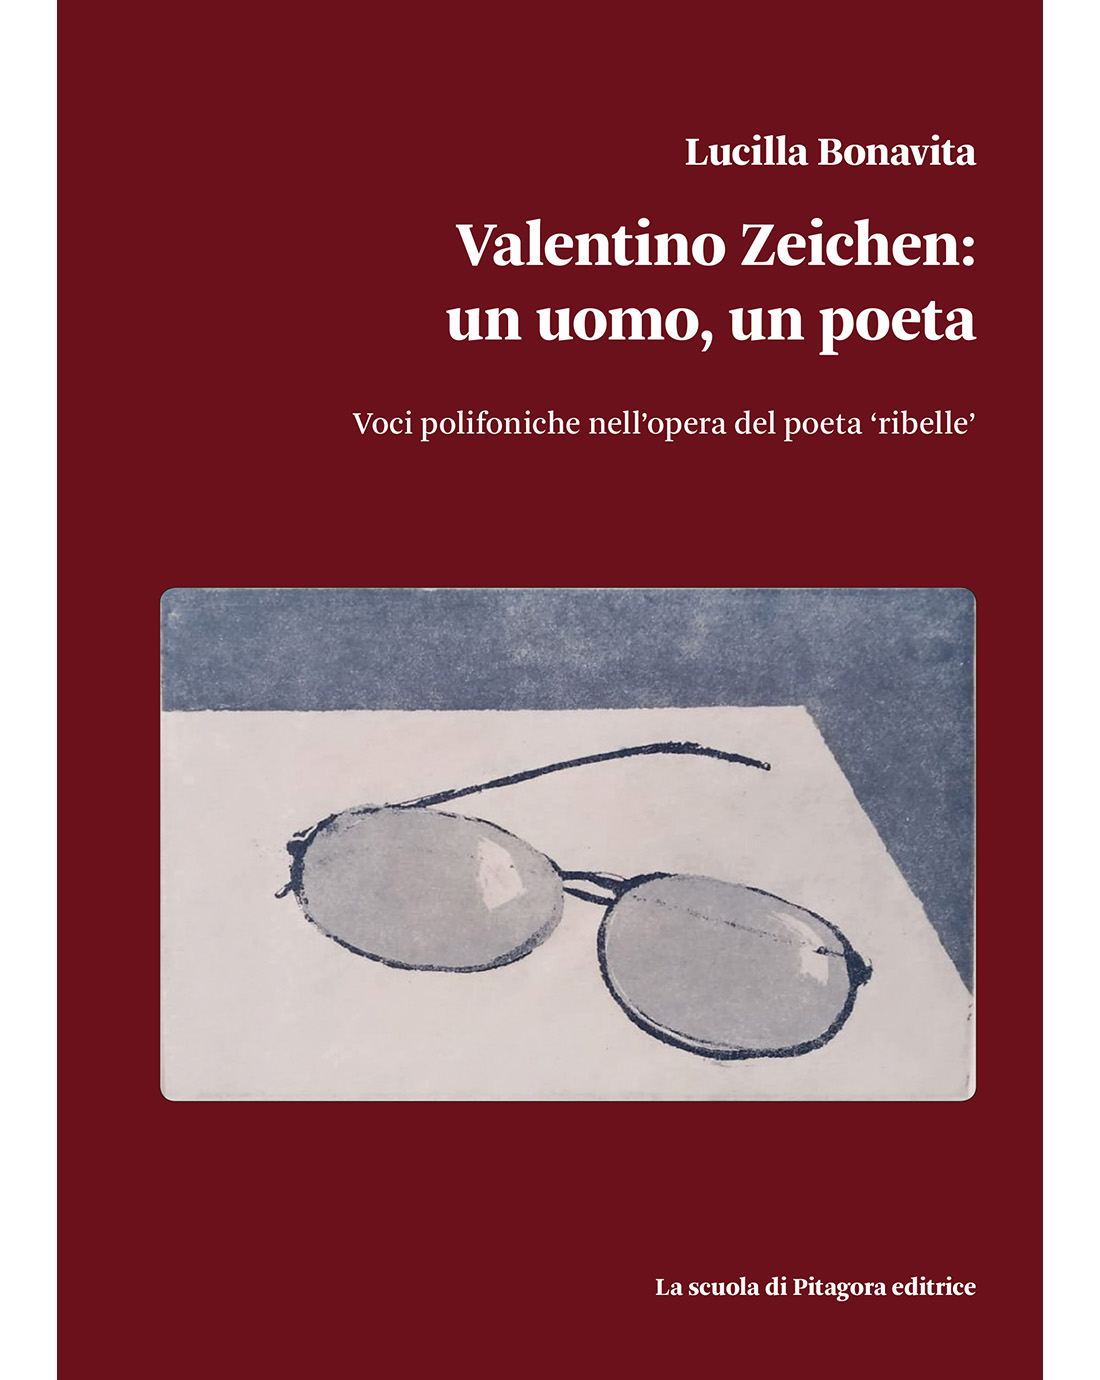 Valentino Zeichen: un uomo, un poeta